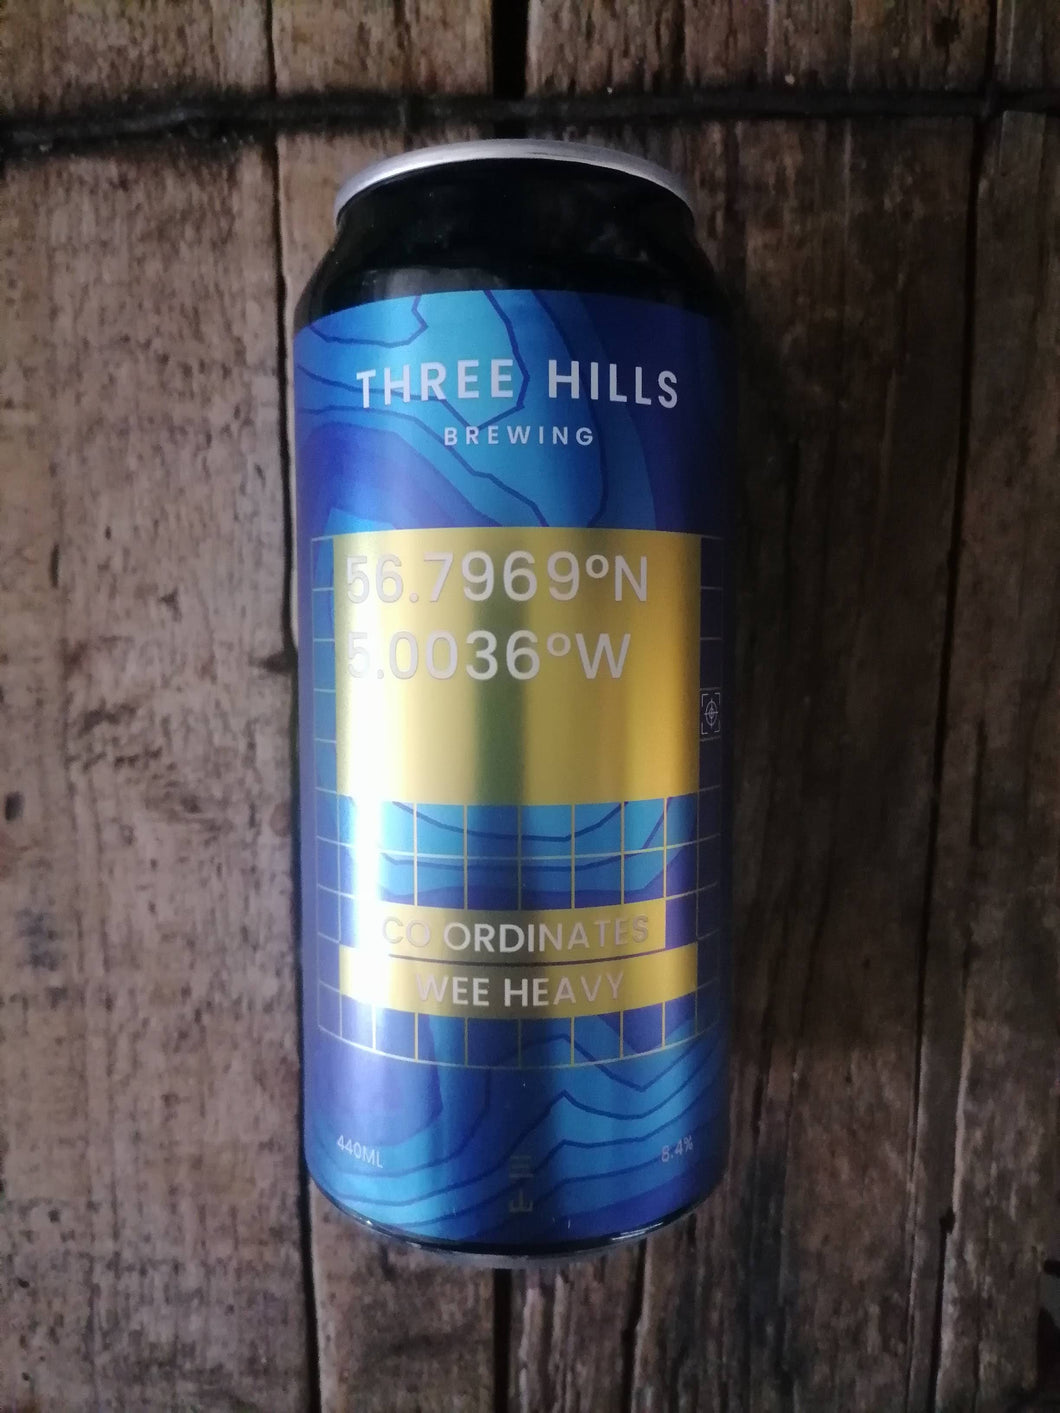 Three Hills Co-ordinates Wee Heavy 8.4% (440ml can)